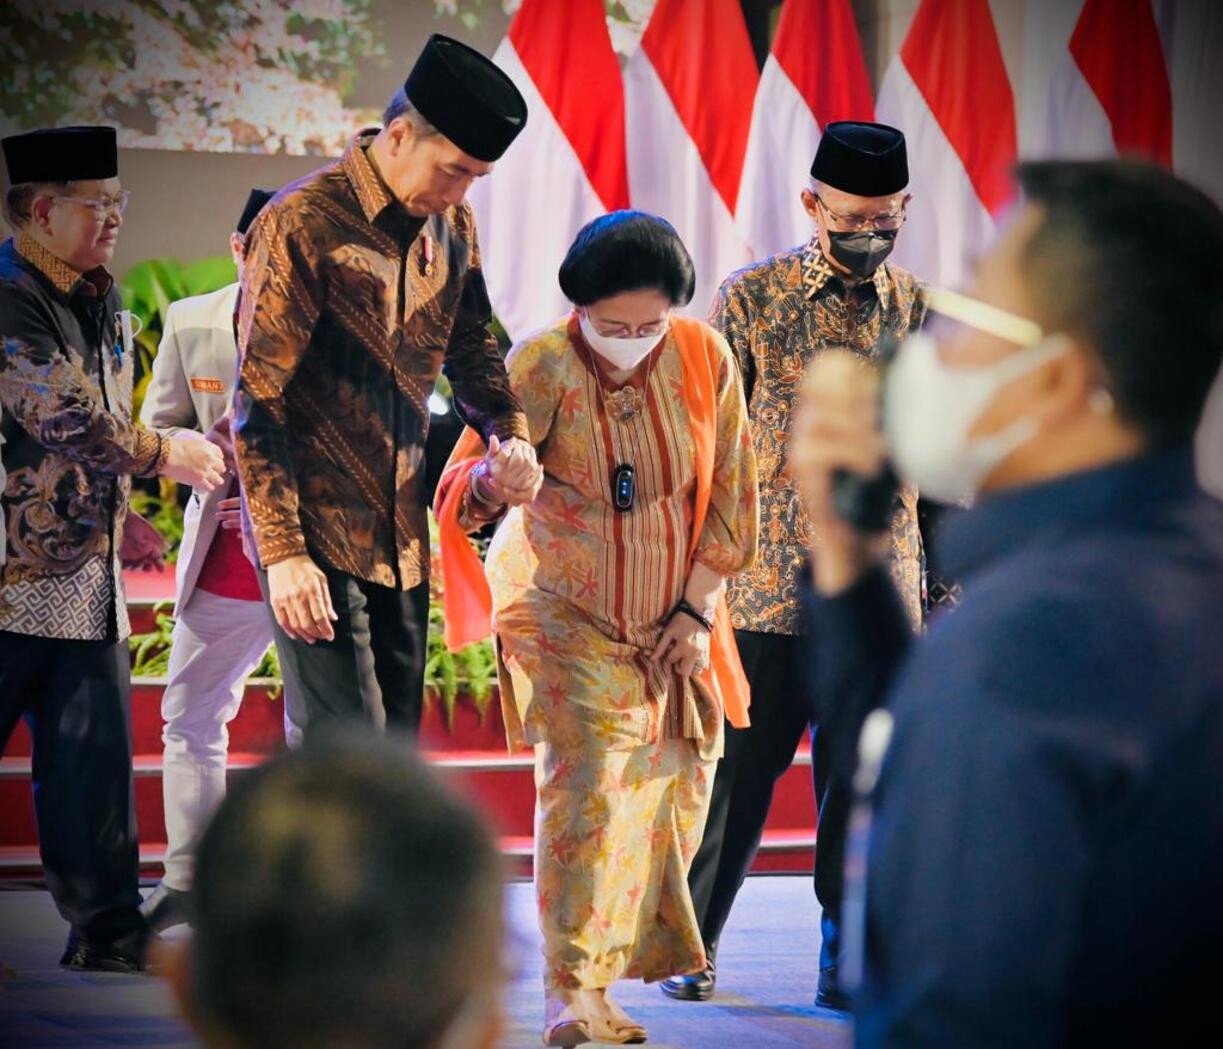 Ketum Muhammadiyah Ungkap Kiprah Bung Karno di Depan Megawati: Beliau Murid Spiritual Ahmad Dahlan!